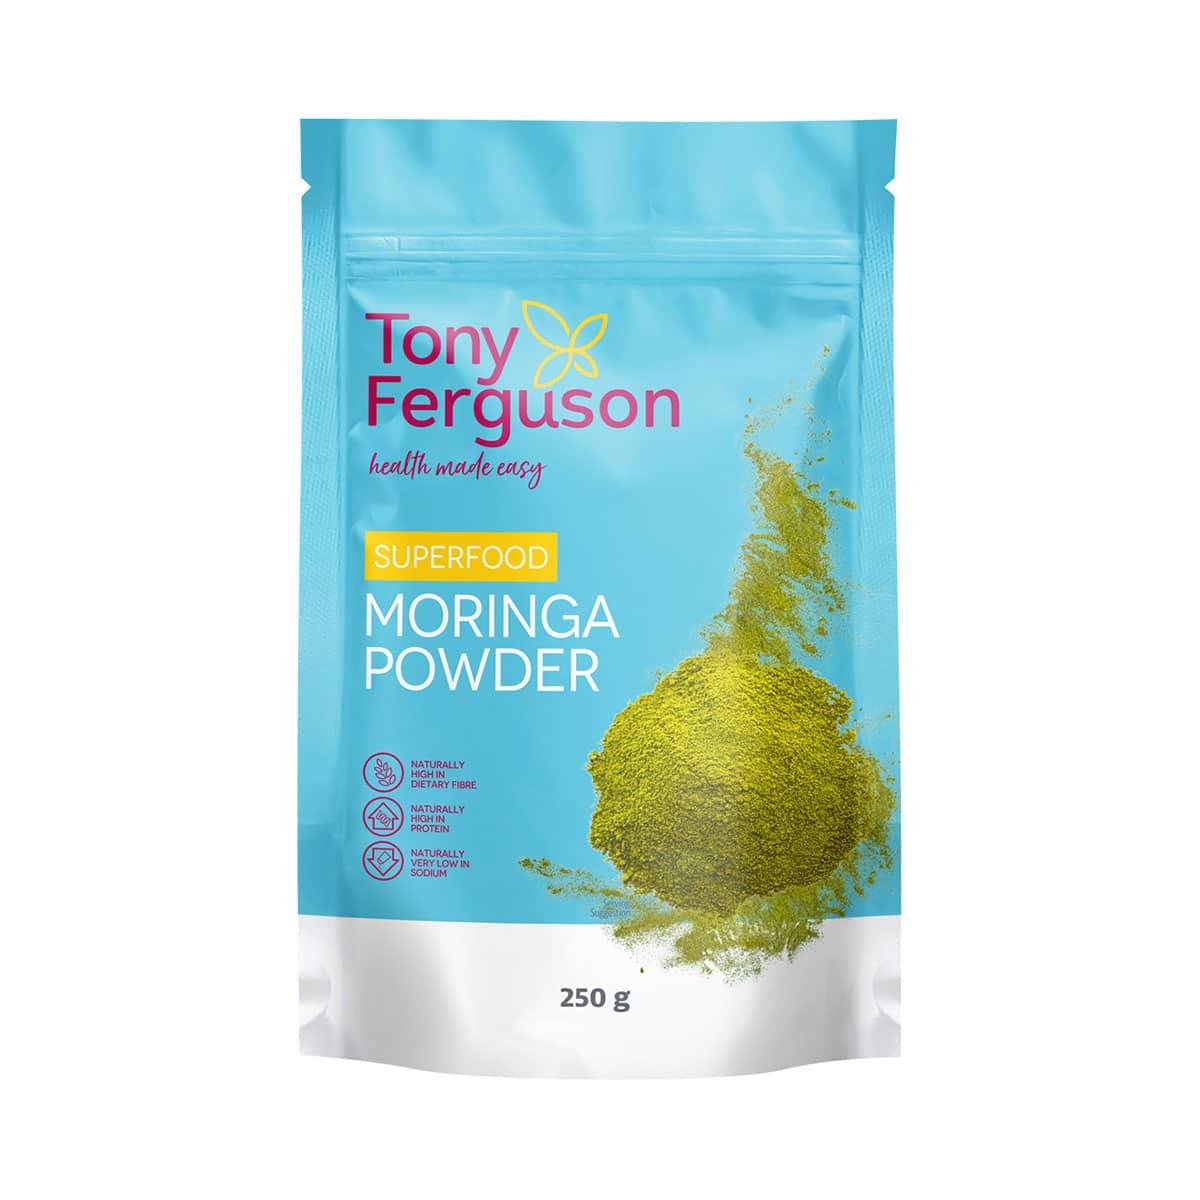 Tony Ferguson Superfood Moringa Powder - 250g